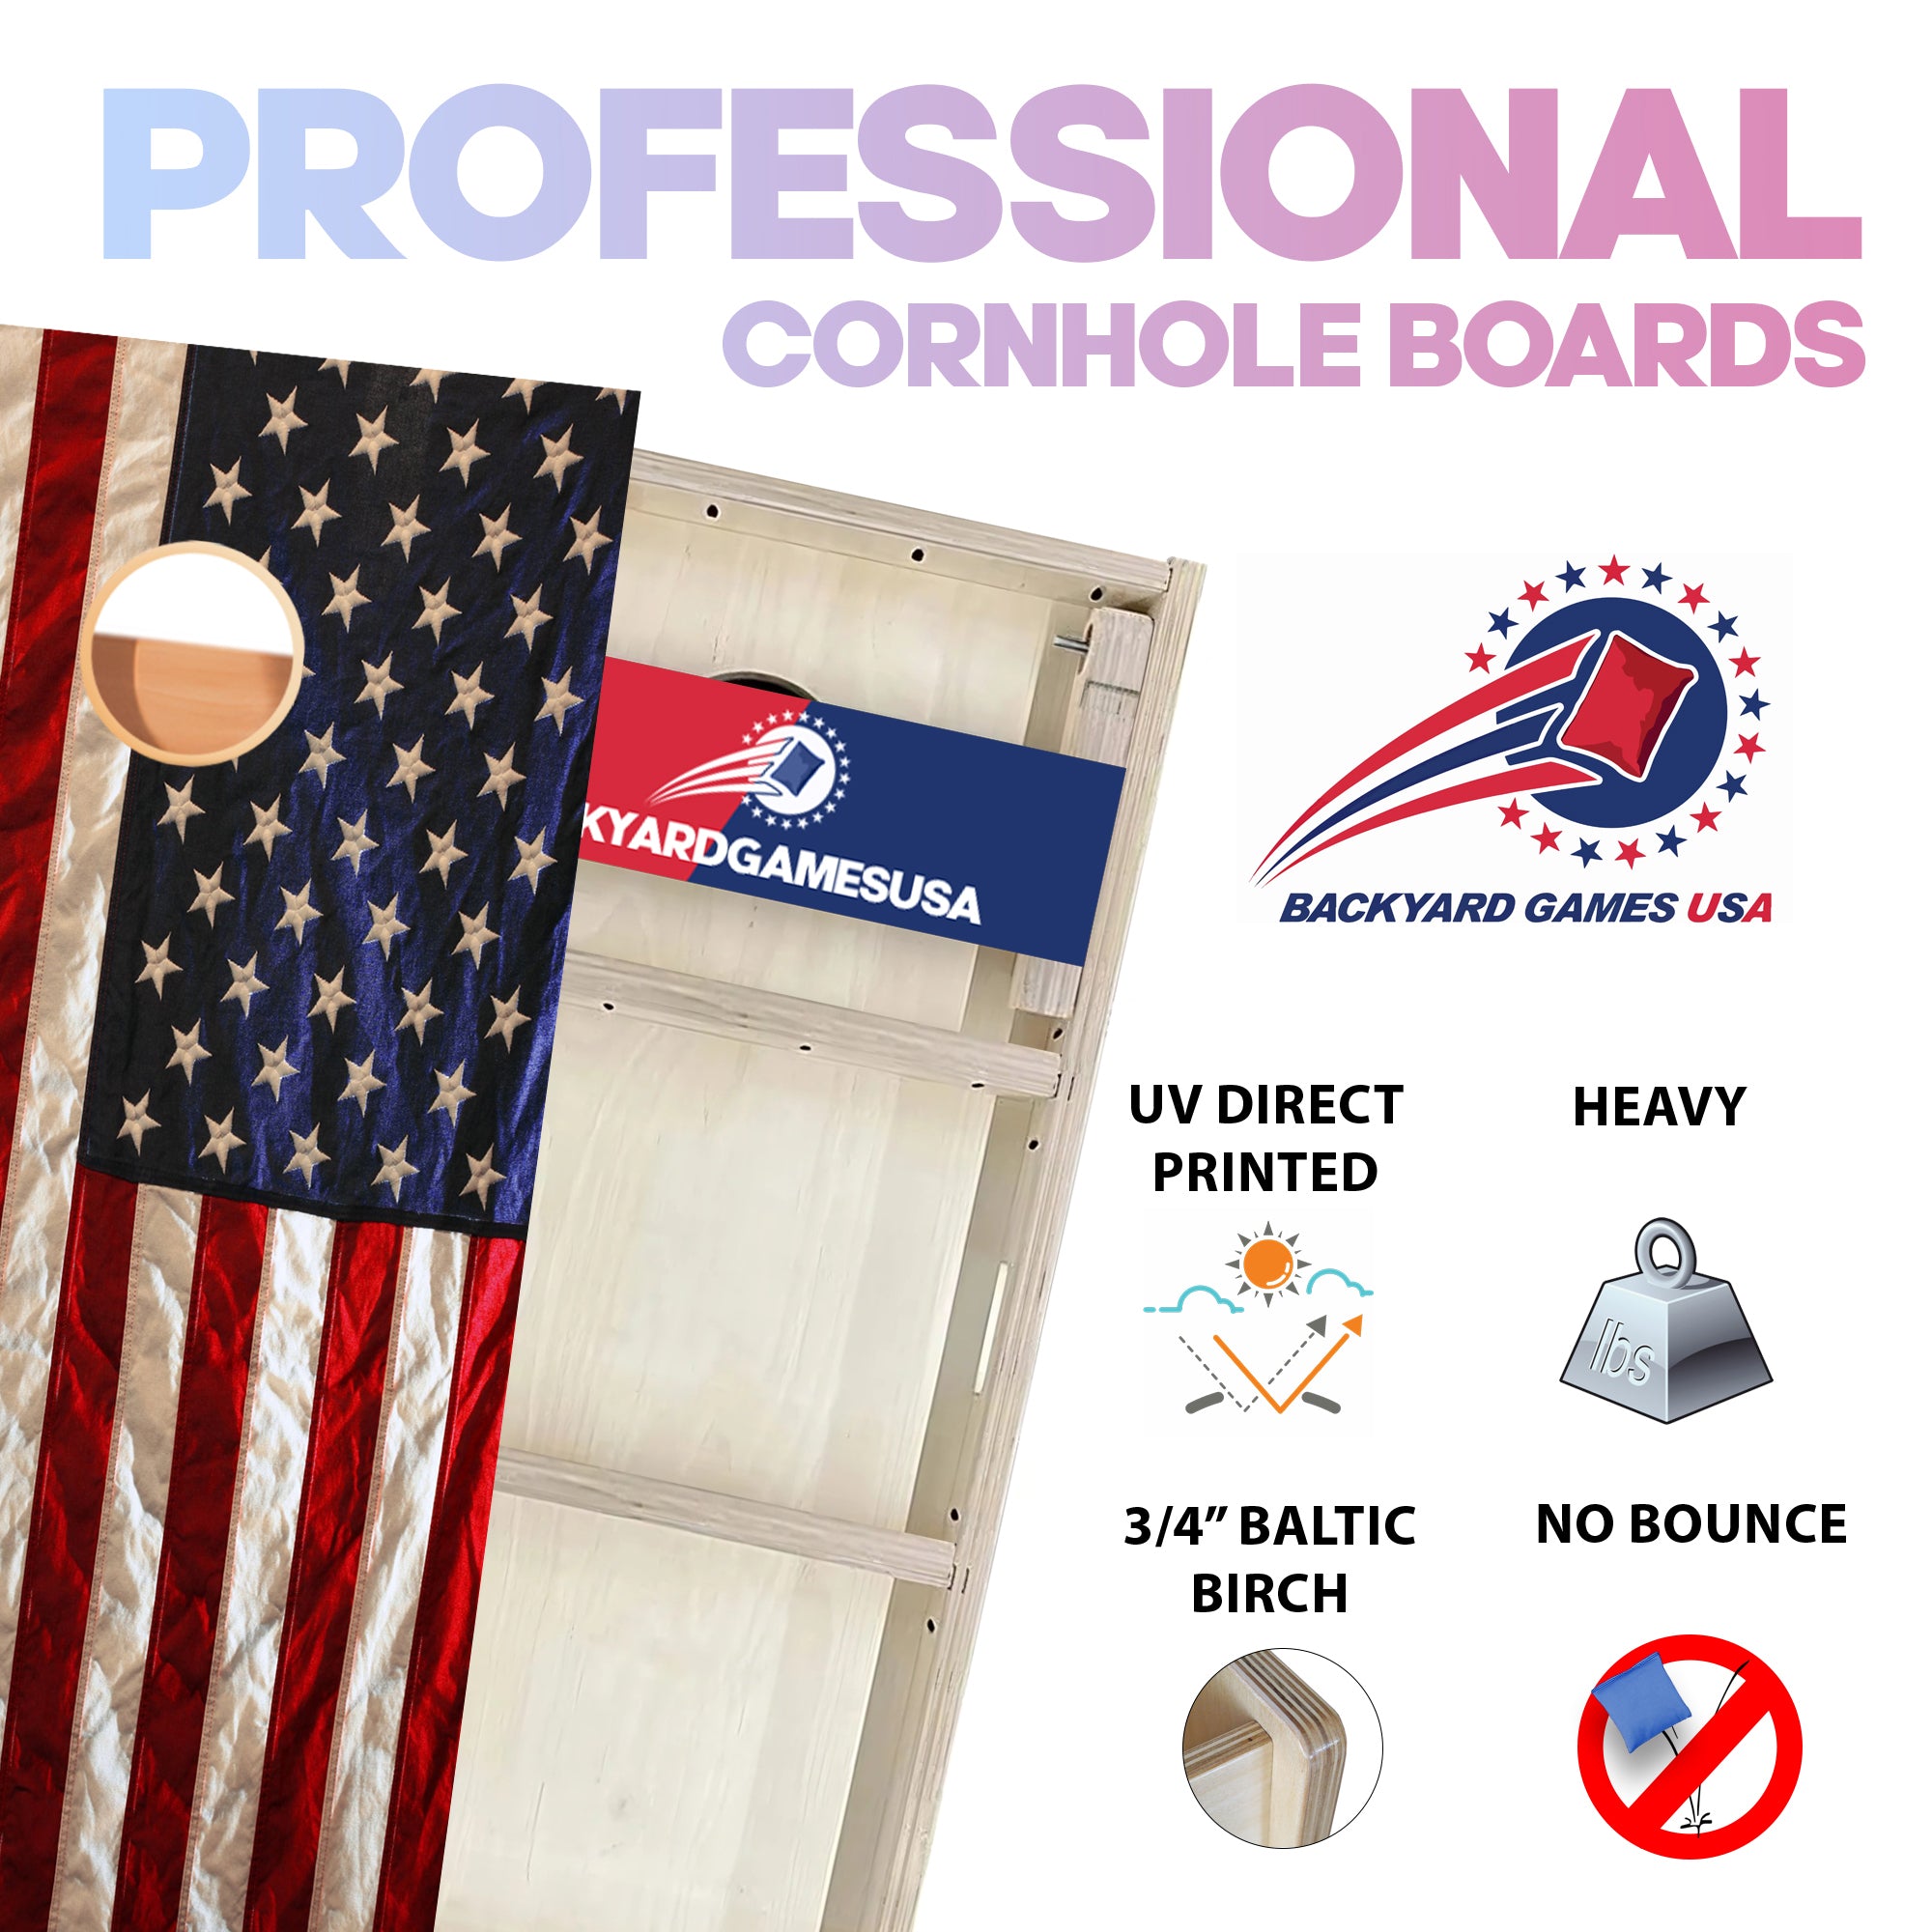 Wrinkled Flag Professional Cornhole Boards